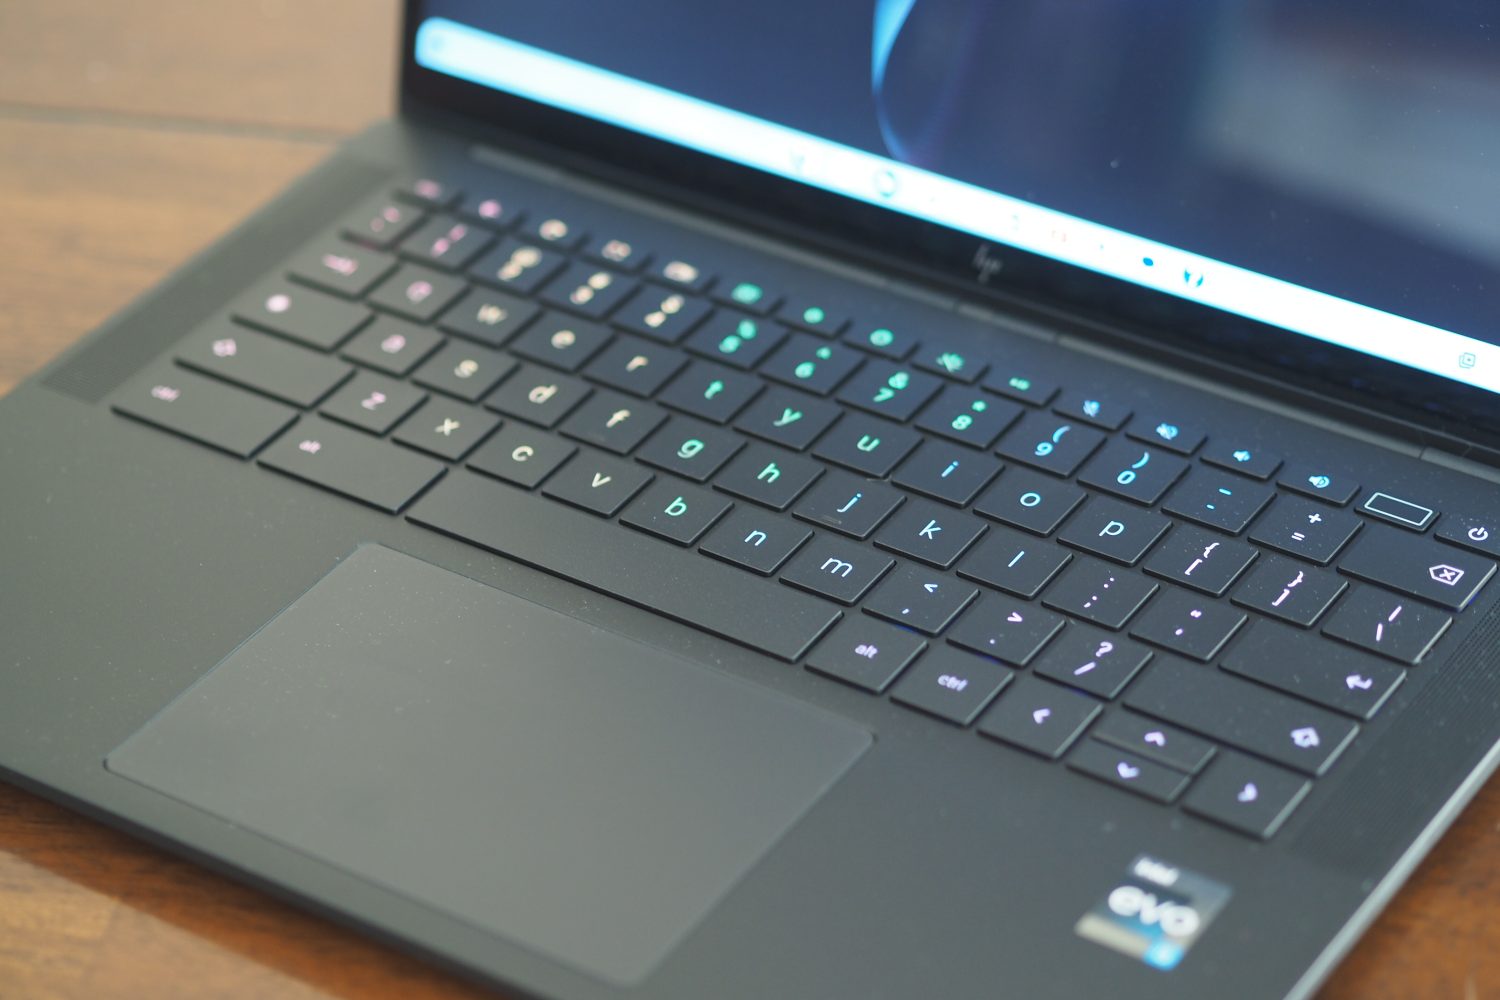 Vista superior do Chromebook HP Dragonfly Pro mostrando o teclado e o touchpad.